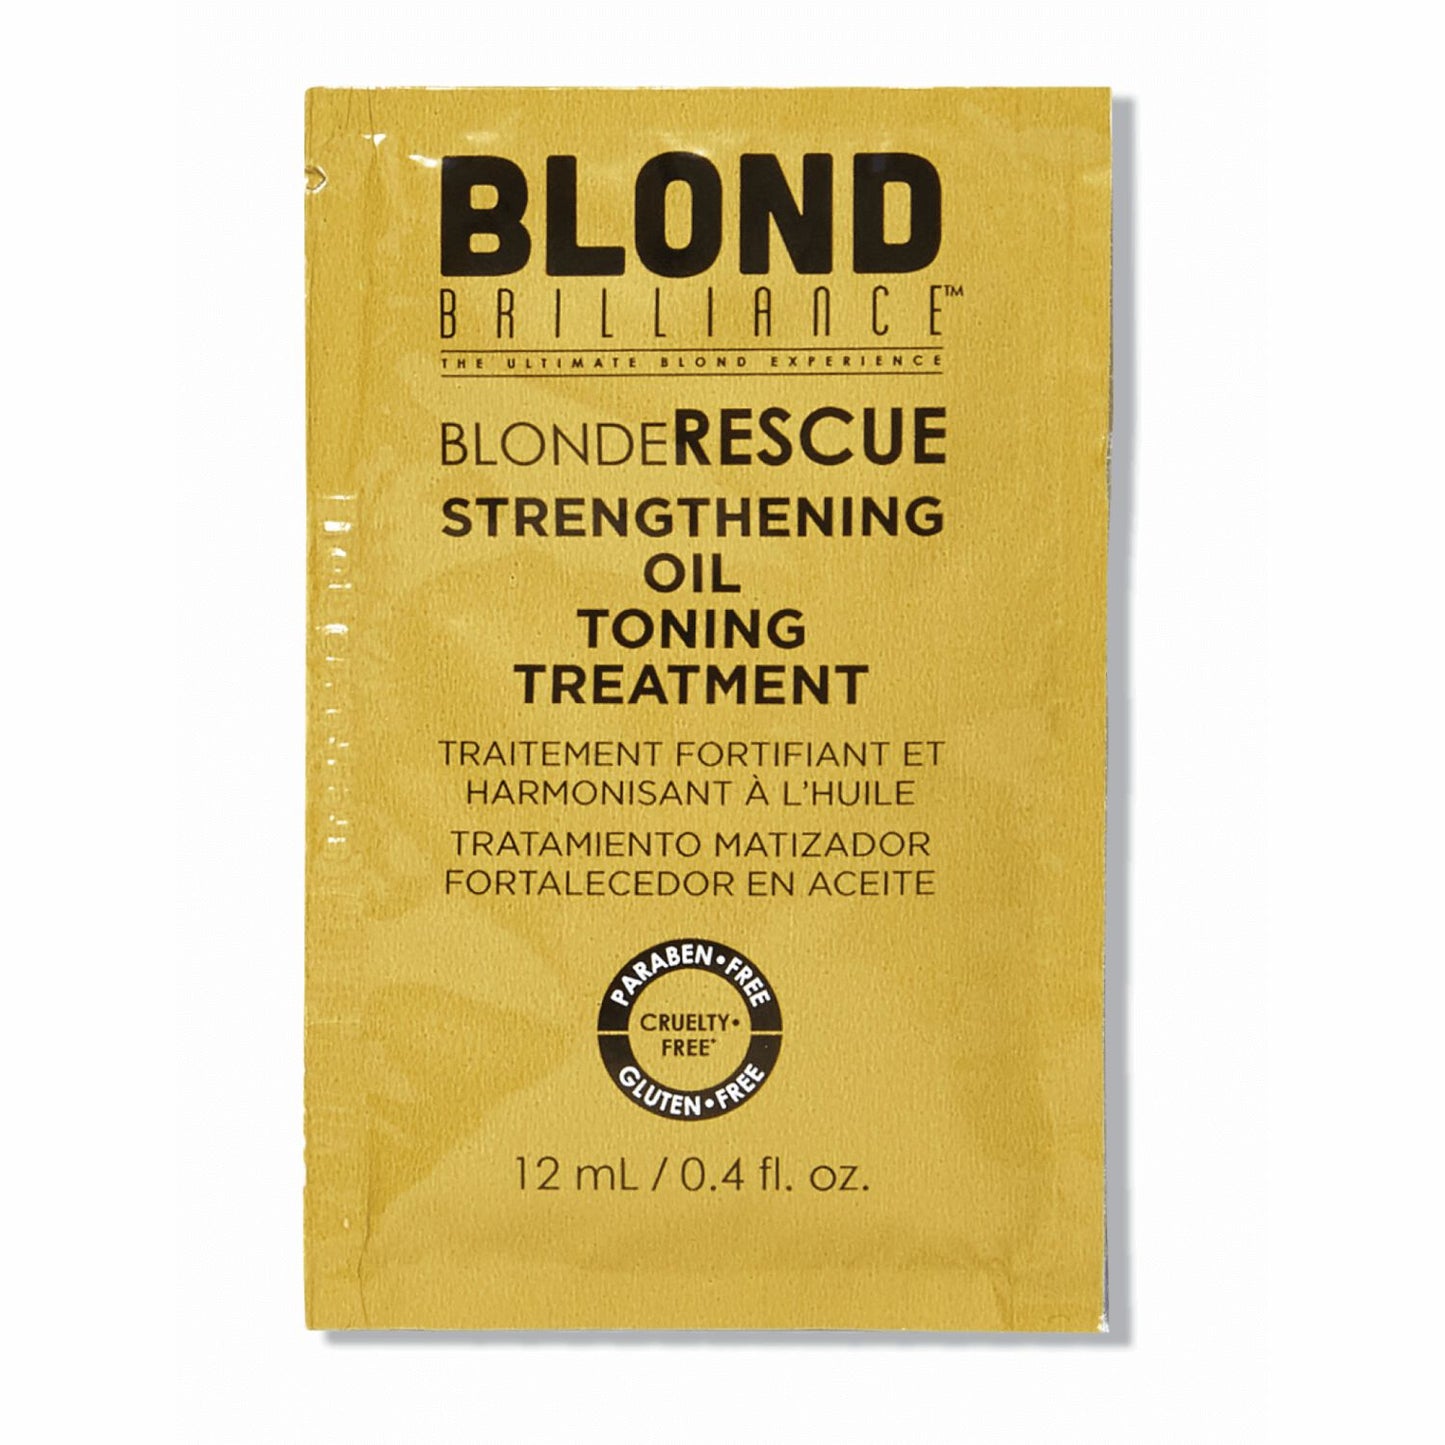 Blond Brilliance Strengthening Oil Toning Treatment